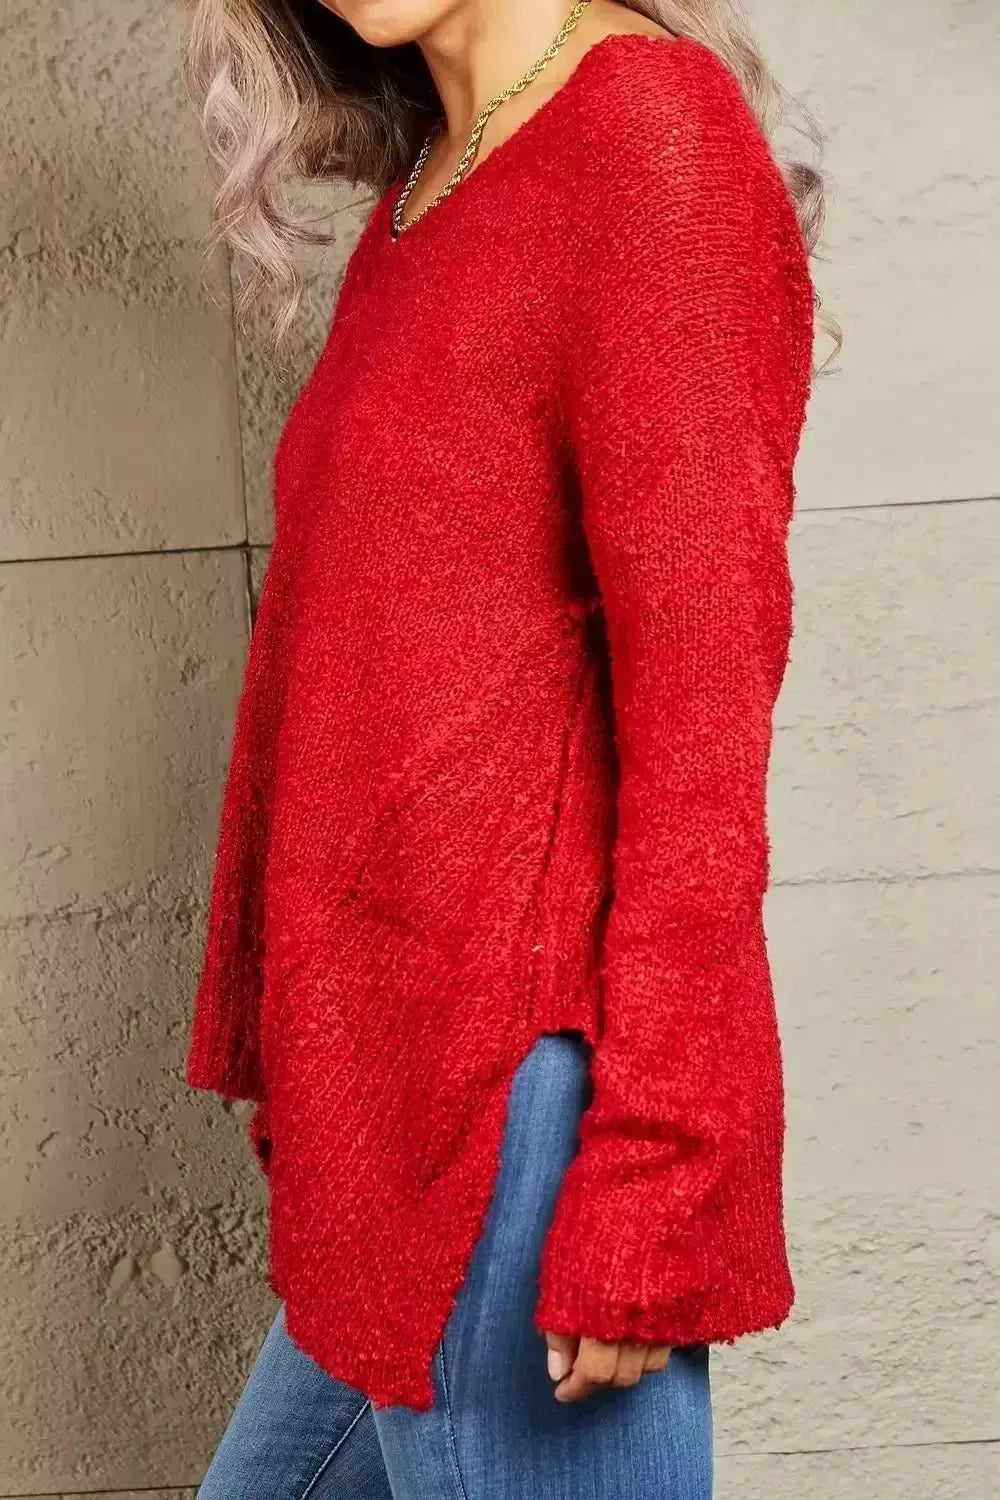 Heimish By The Fire Full Size Draped Detail Knit Sweater - Godiva Oya Bey